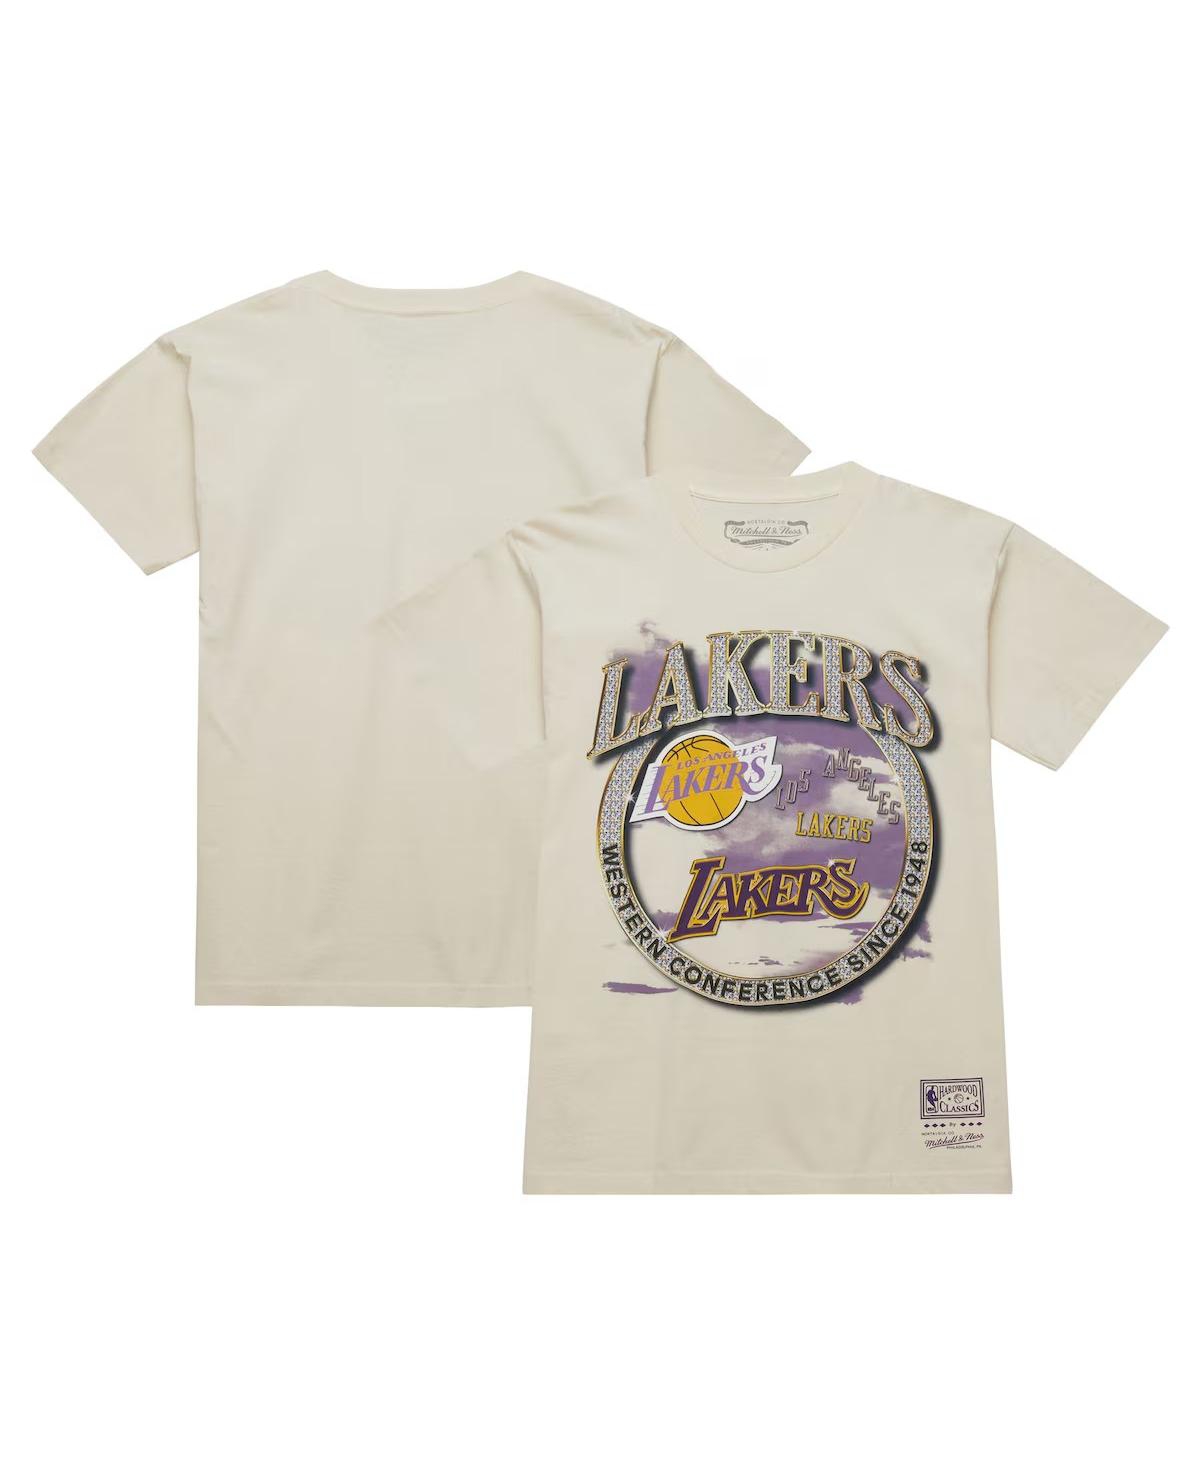 Men's Tan Los Angeles Lakers Hardwood Classics Vintage-like Soul Crown Jewels T-Shirt - Tan